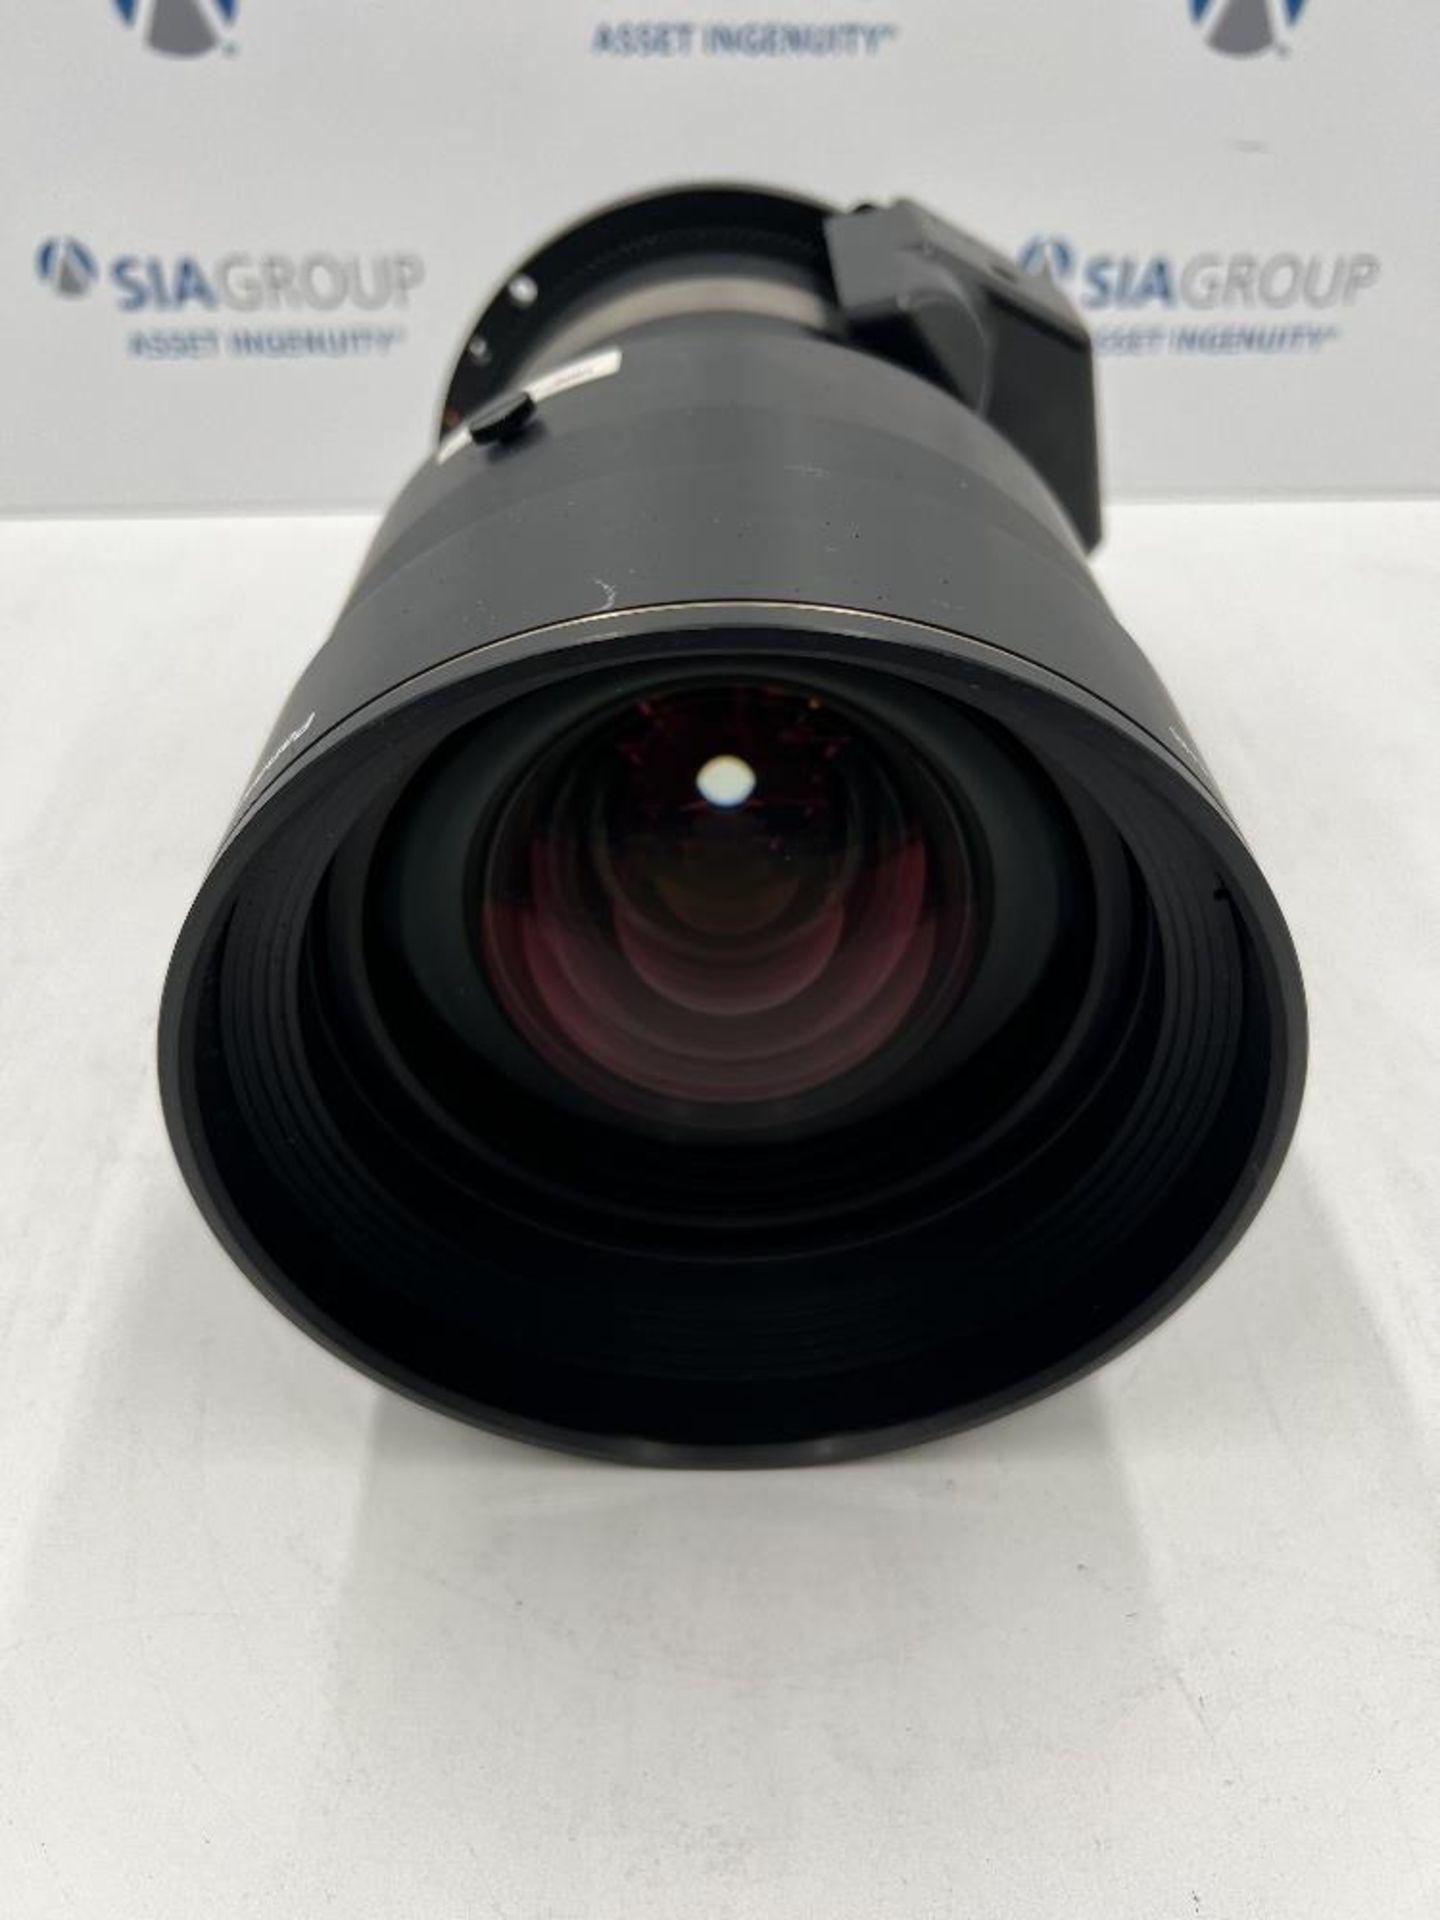 Panasonic ET-D75LE6 0.9-1.1 Zoom Lens With Carrier Case - Image 5 of 8